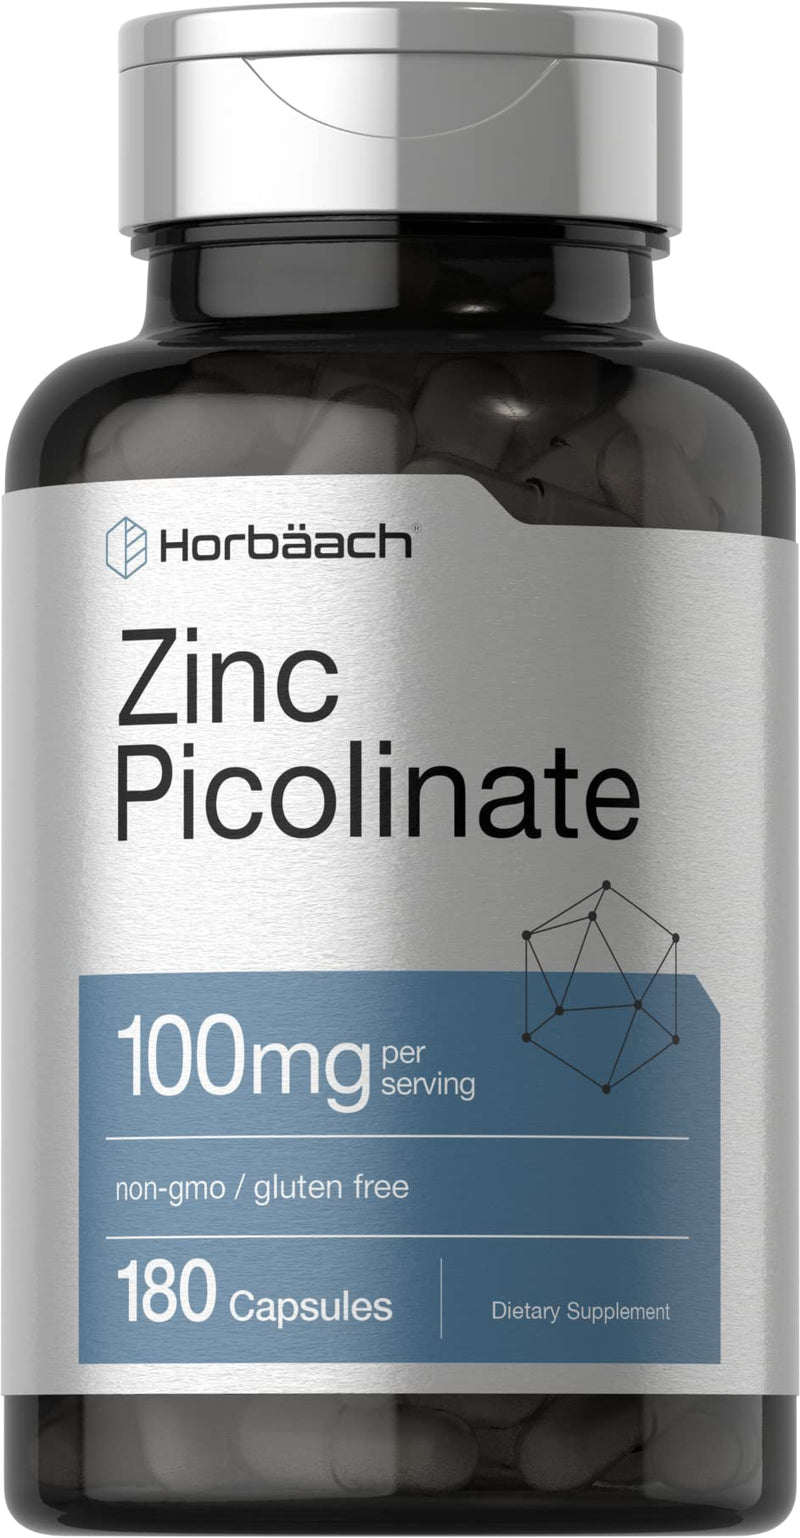 [Australia] - Zinc Picolinate 100mg | 180 Capsules | High Potency | Non-GMO, Gluten Free | Zinc Supplement | by Horbaach 